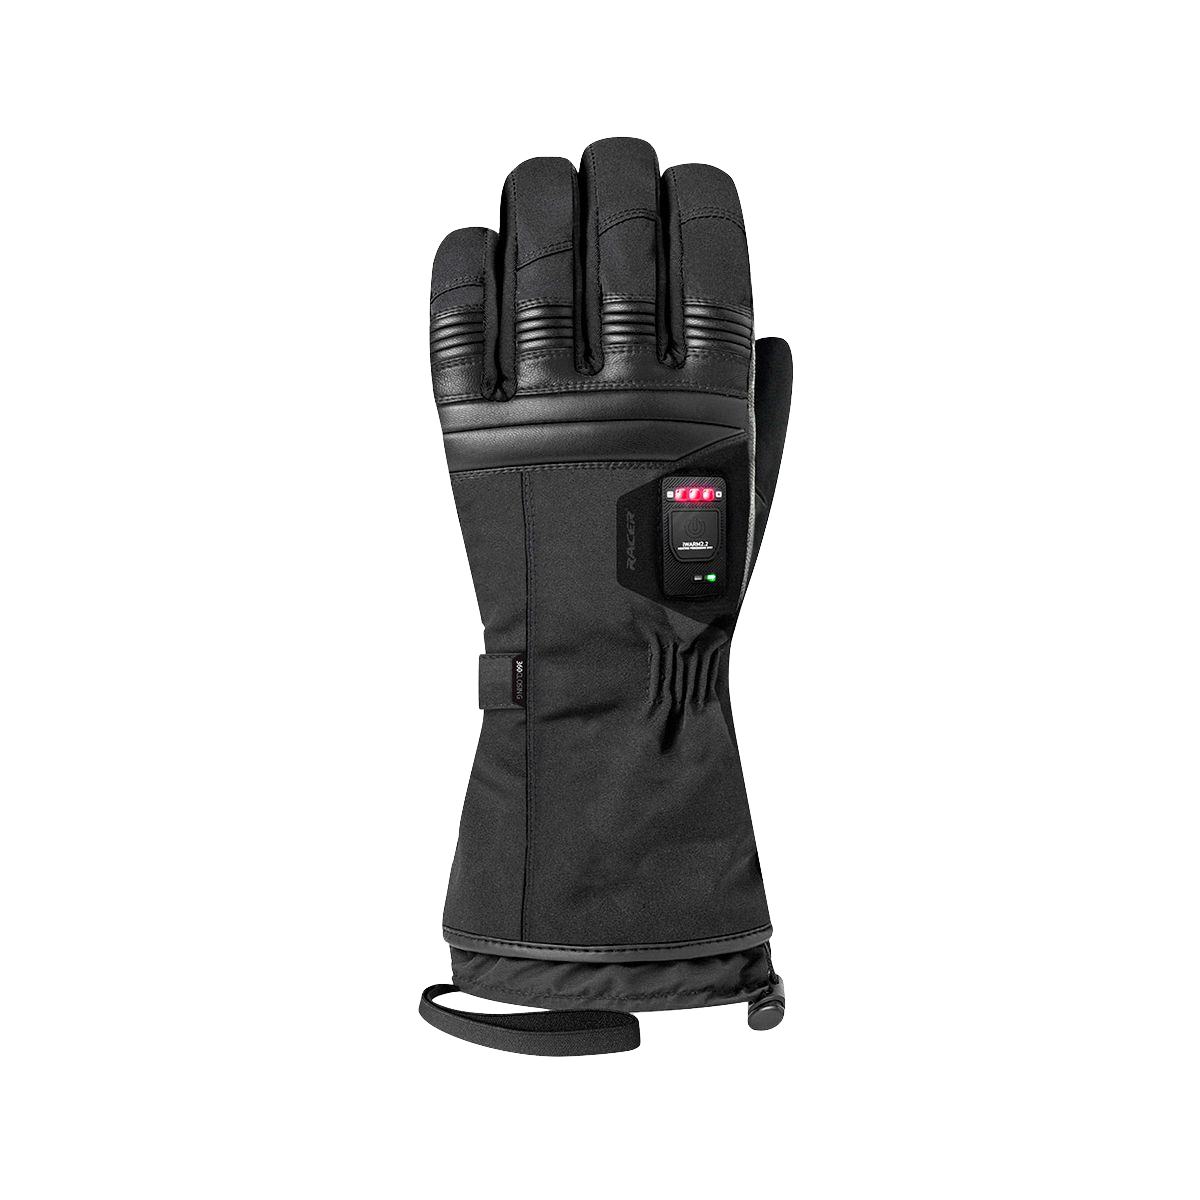 Racer Connectic 4 - Gloves - Men's